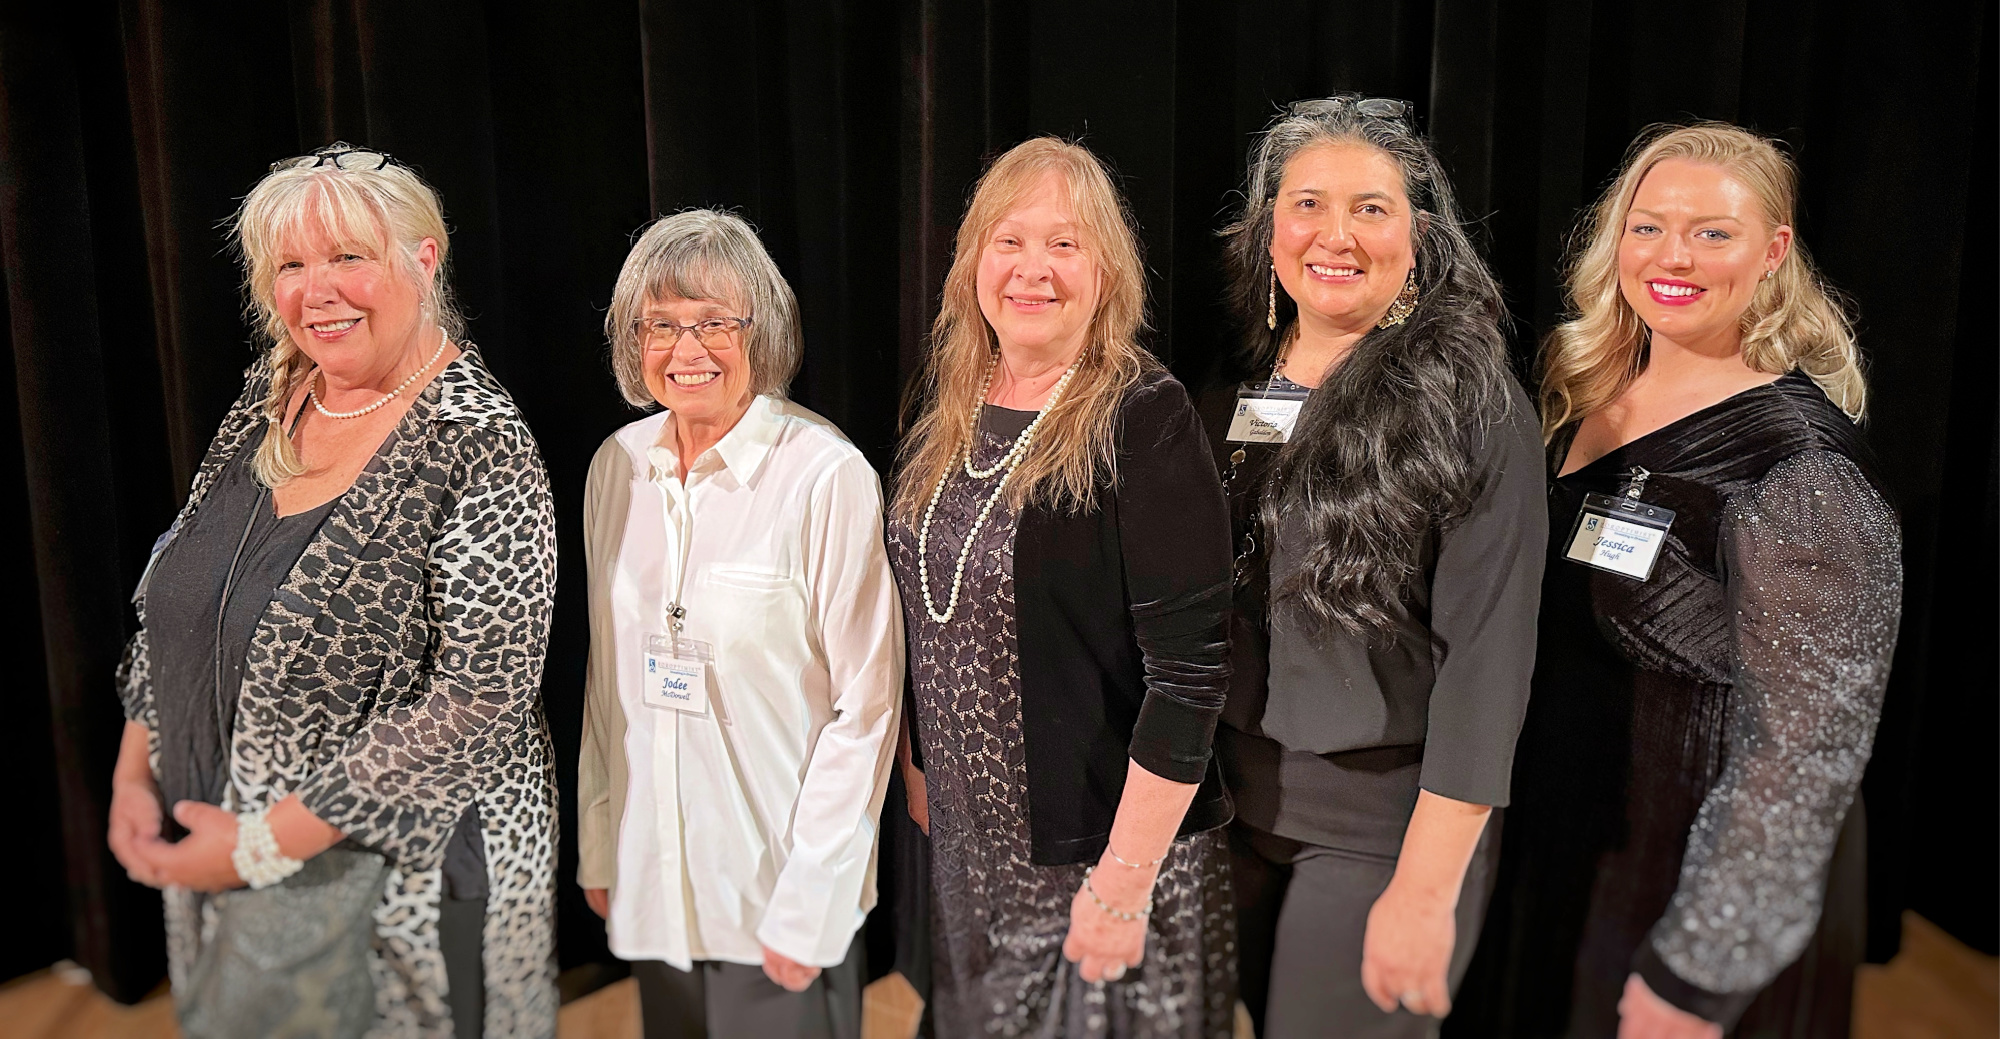 The Celebrate Women Event Committee, May 10, 2023. From the left: Jill Zignego, Jodee McDowell, Tonya Konopka, Victoria Gabaldon, Jessica Hugh.